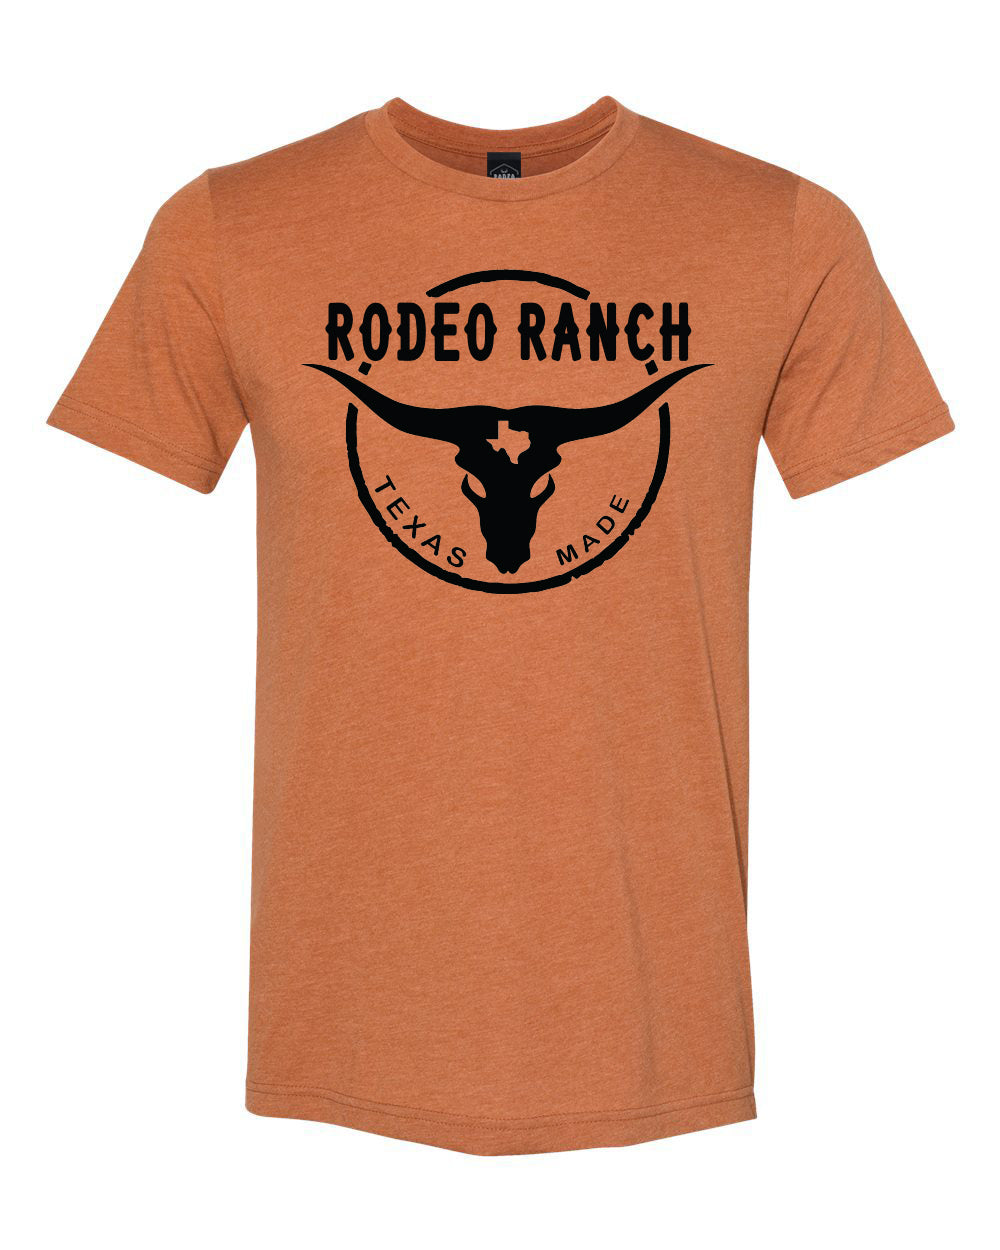 Rodeo Ranch Texas Made Short Sleeve Shirt - Heather Autumn